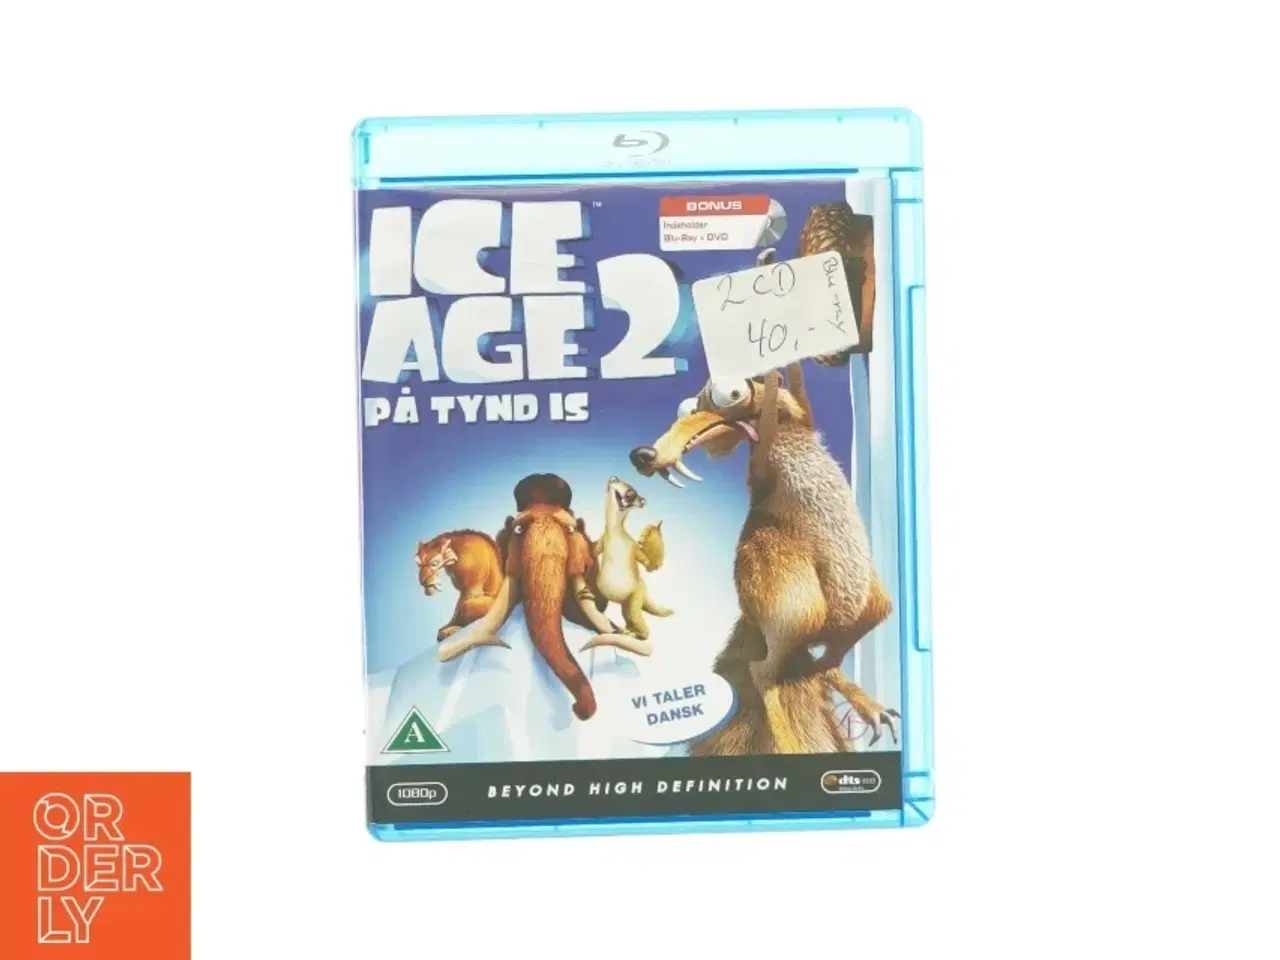 Billede 1 - Ice age 2 på tynd is (Blu-ray)